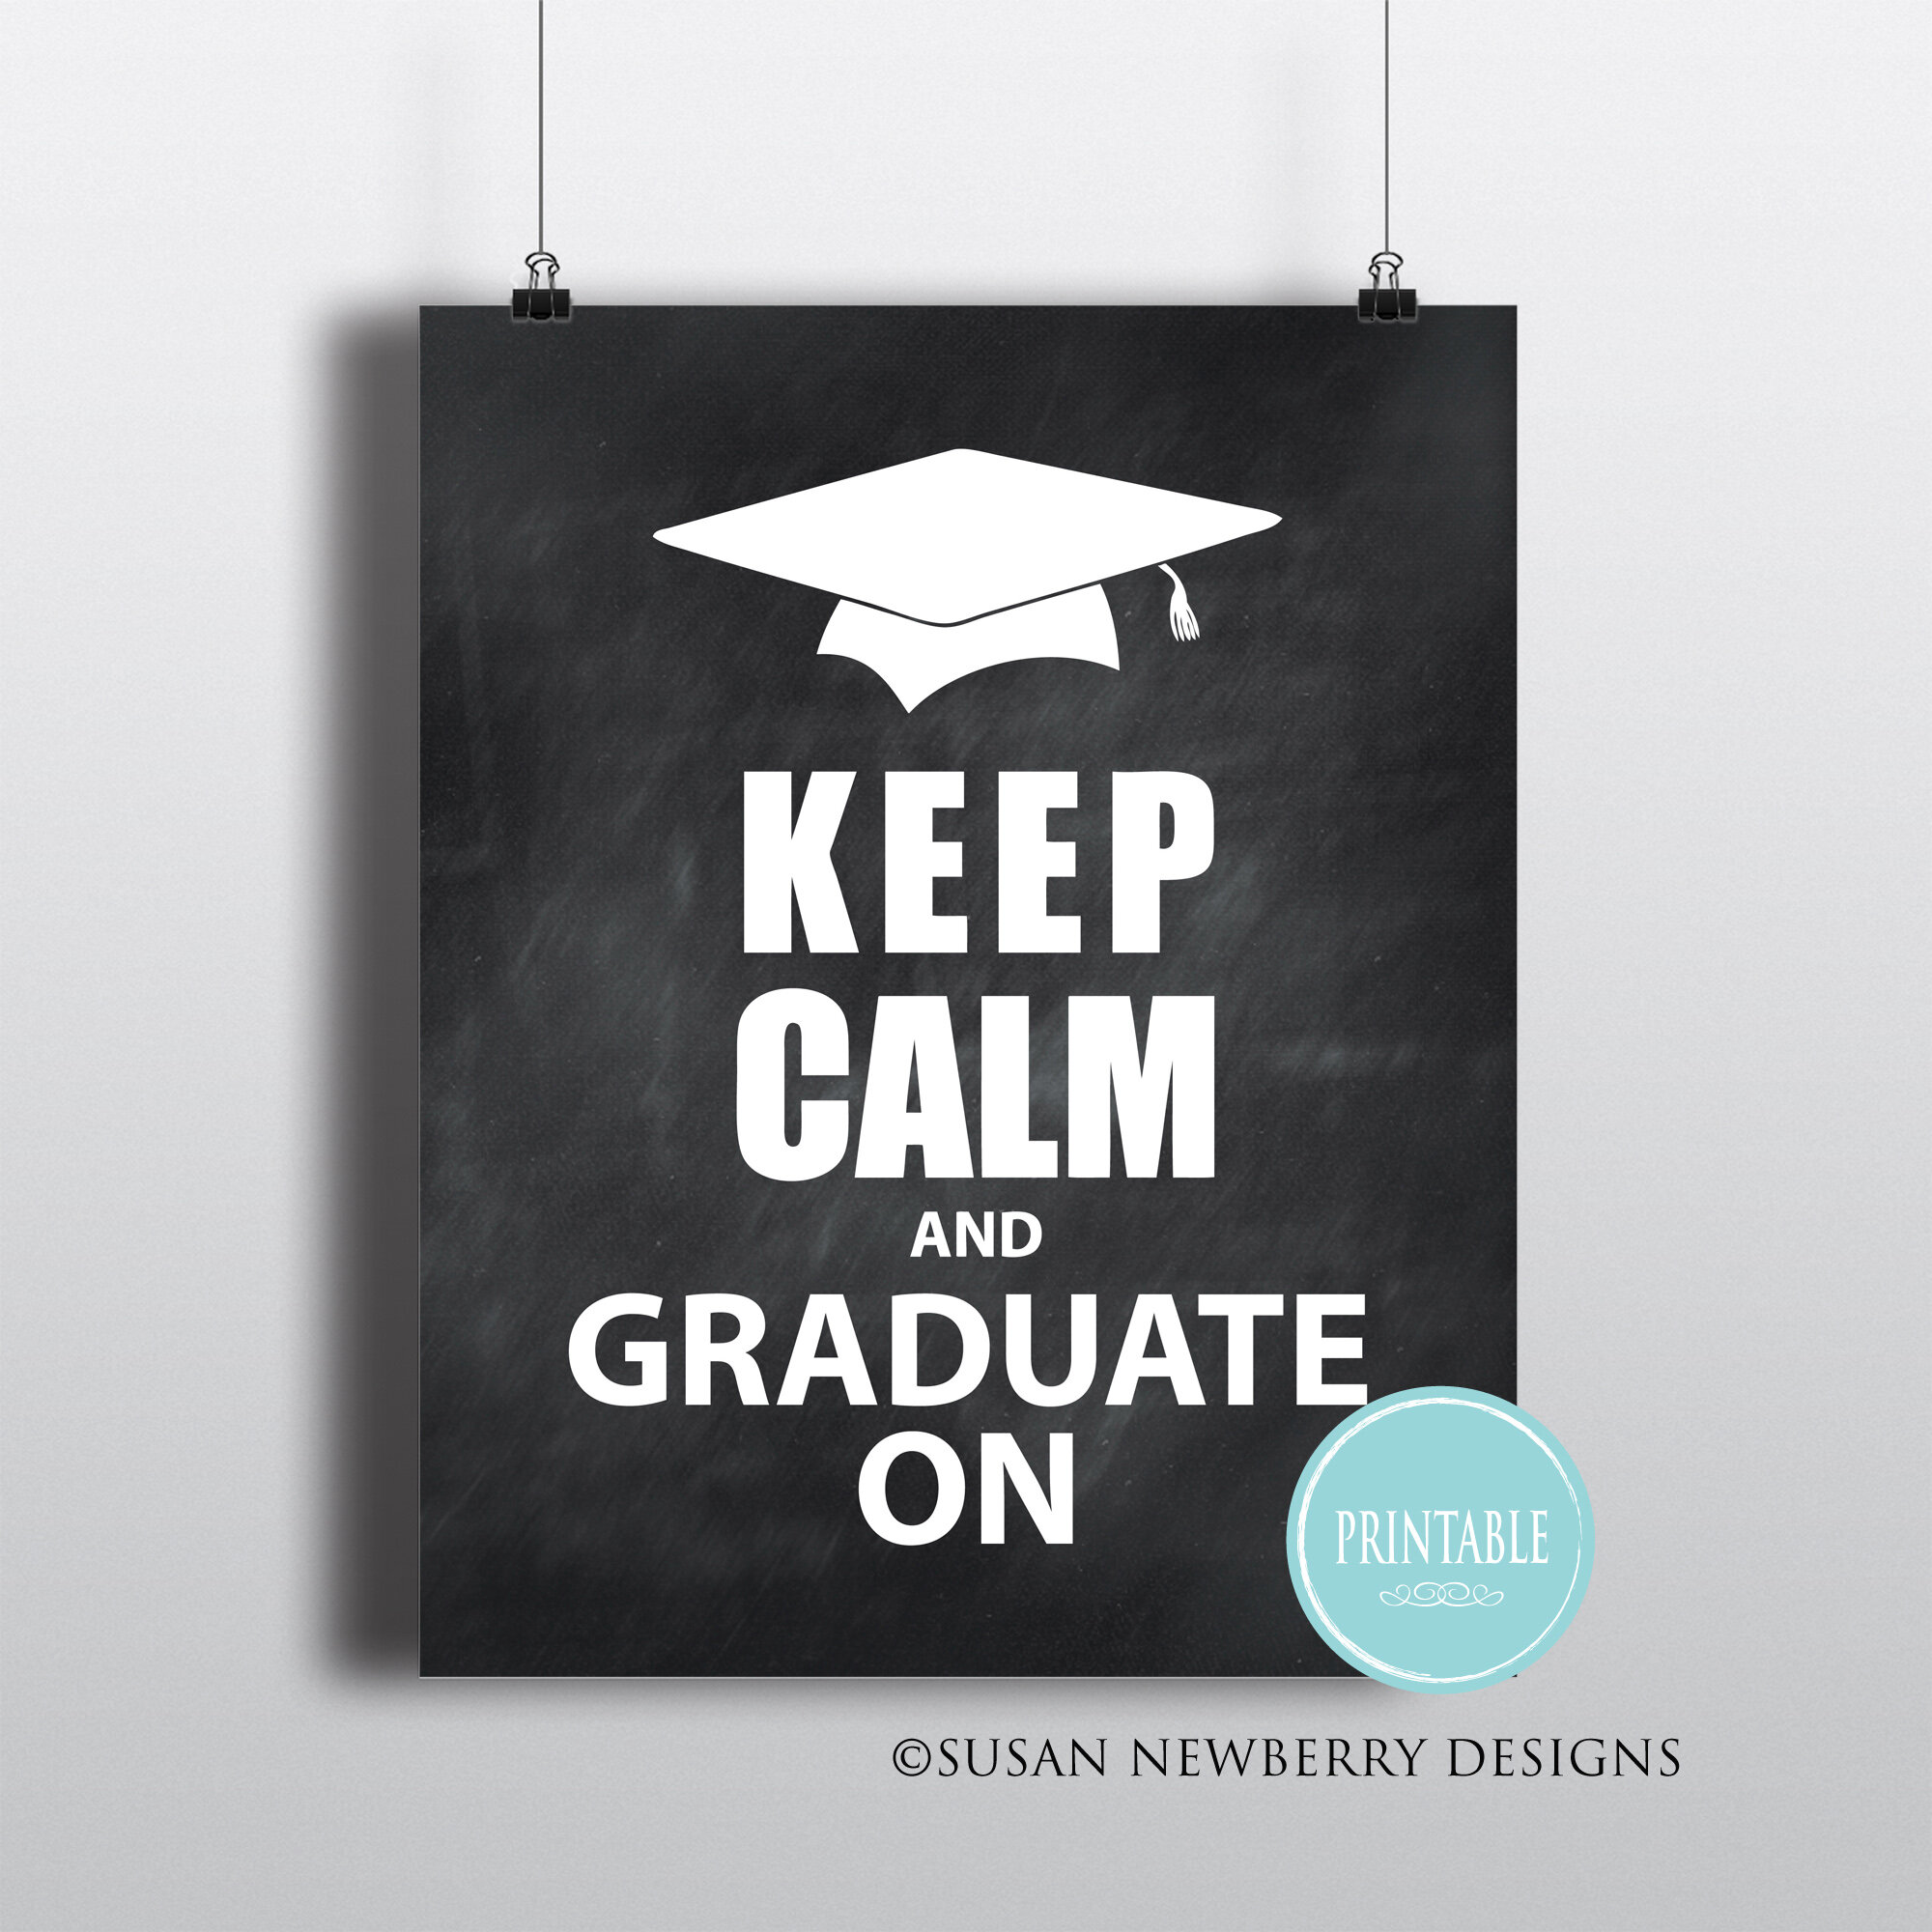 Keep calm graduate on